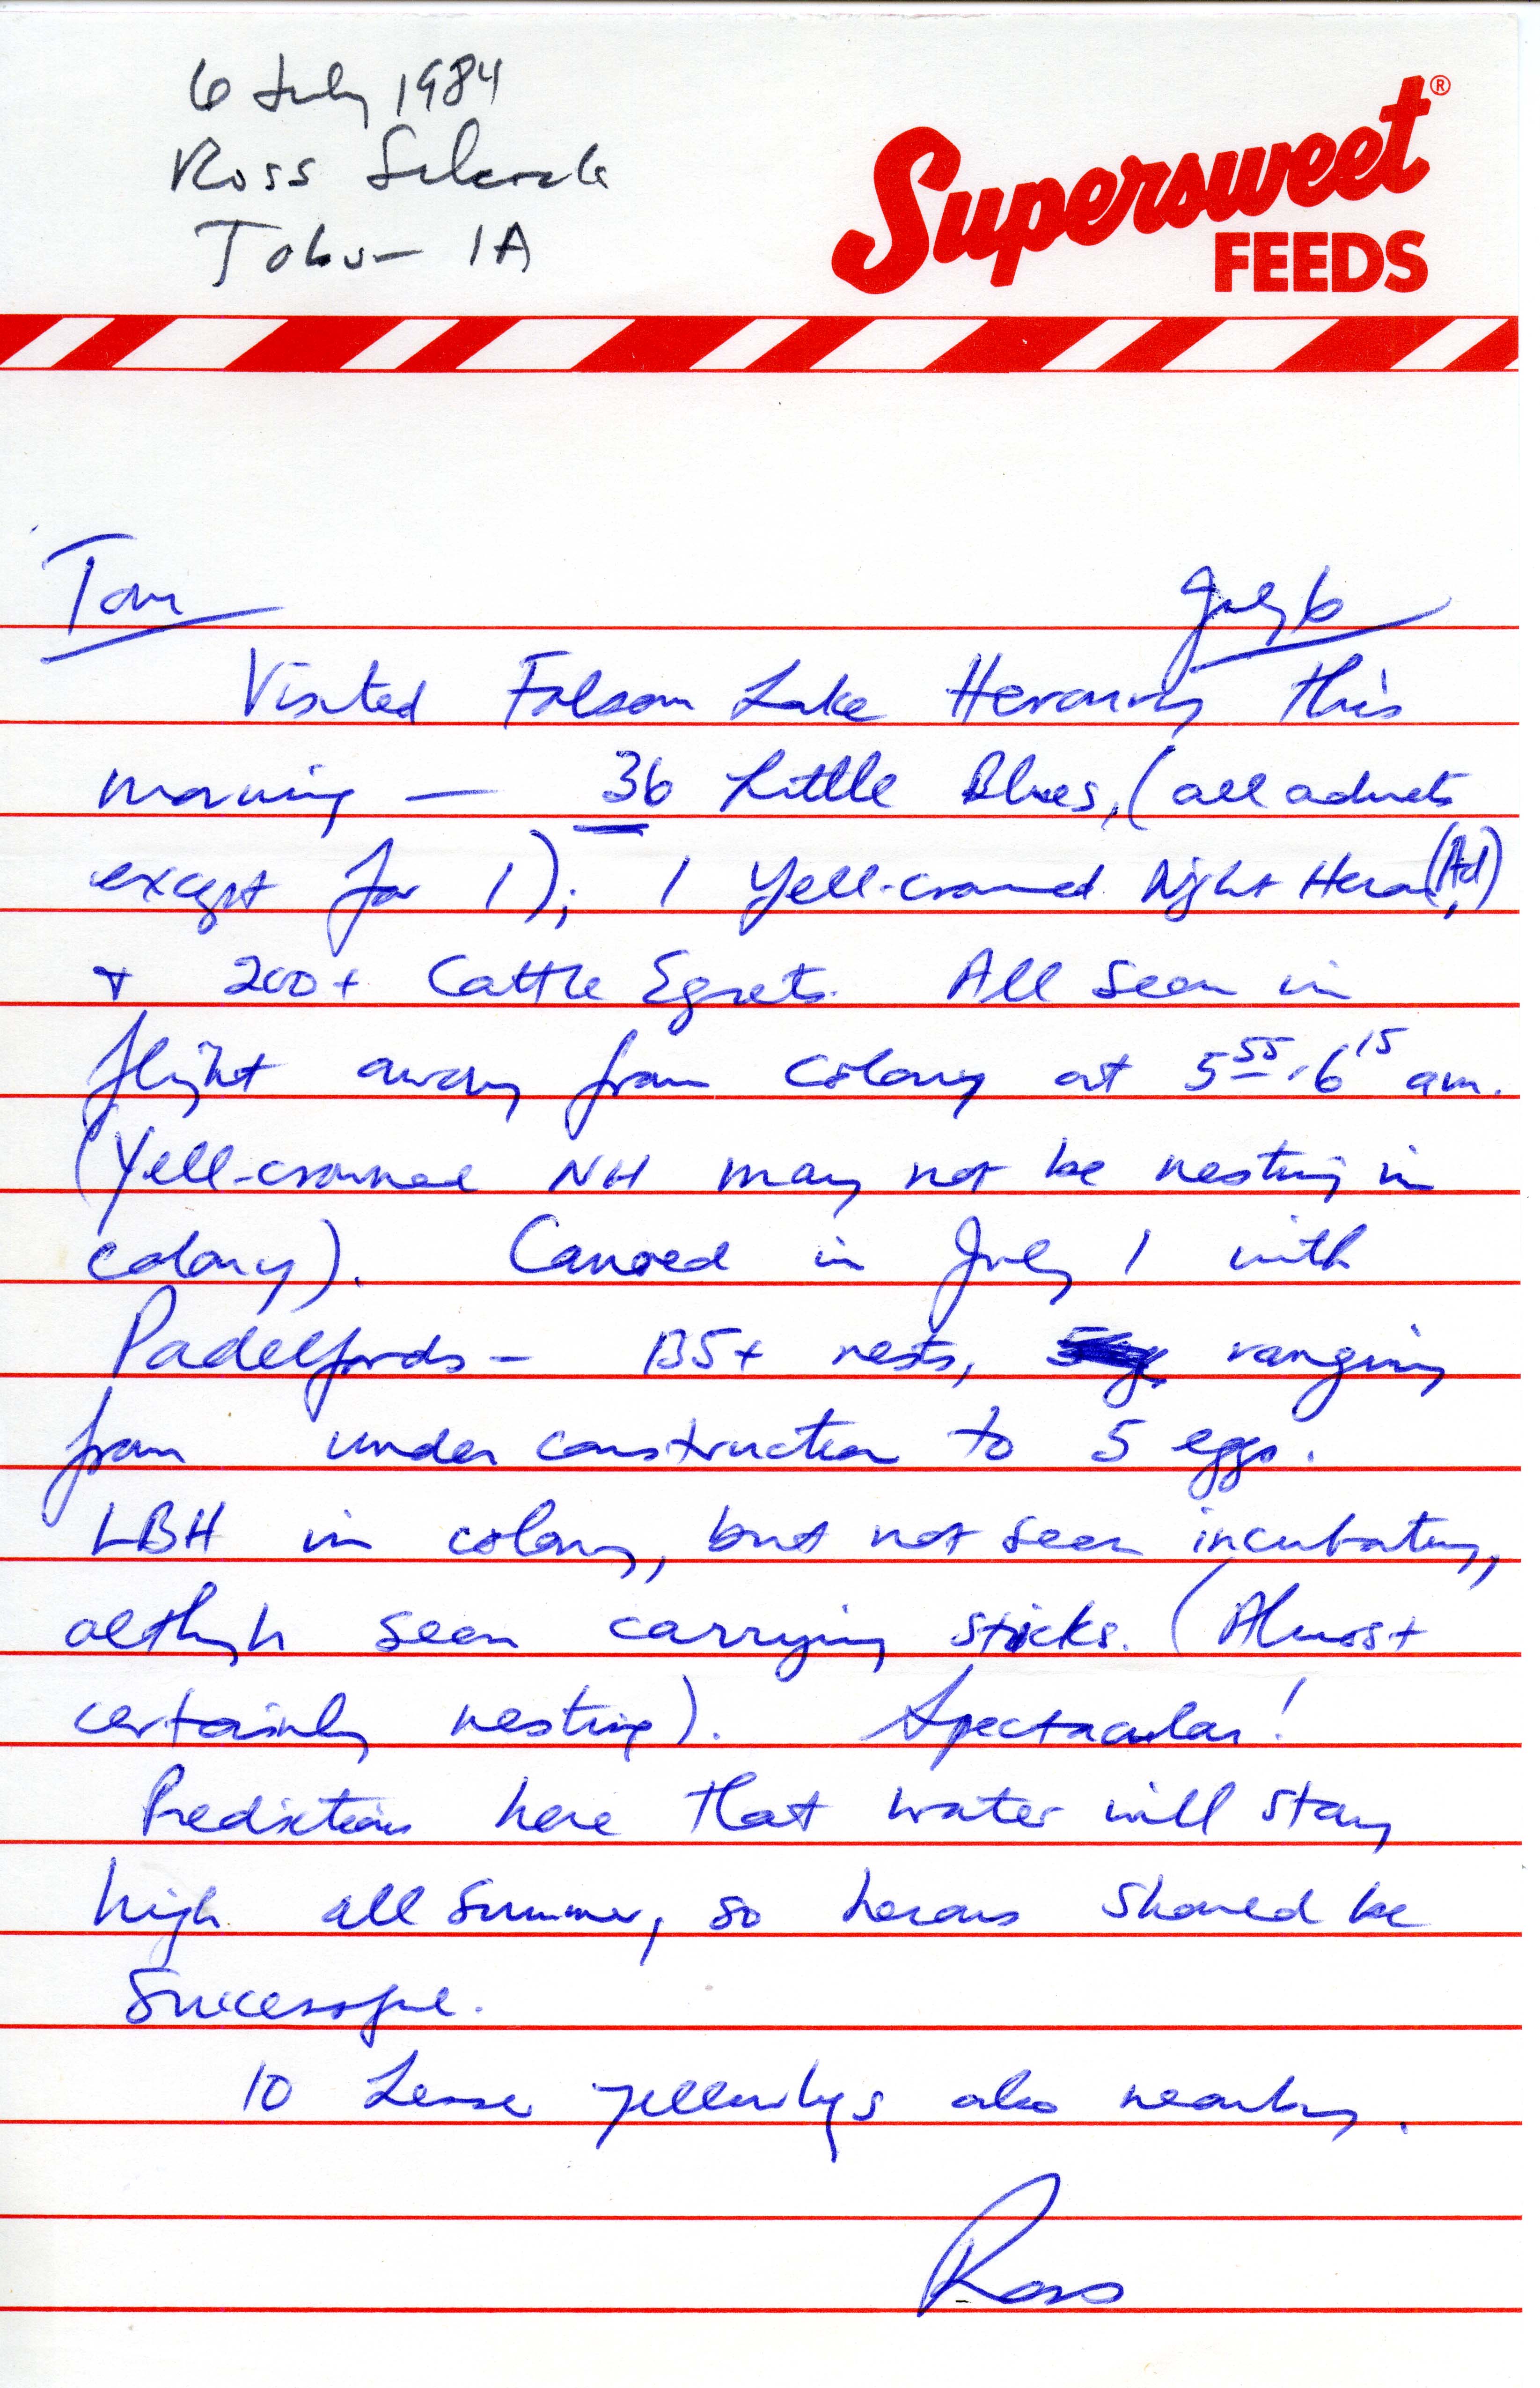 W. Ross Silcock letter to Thomas H. Kent regarding sightings at Folsom Lake Heronry, July 6, 1984